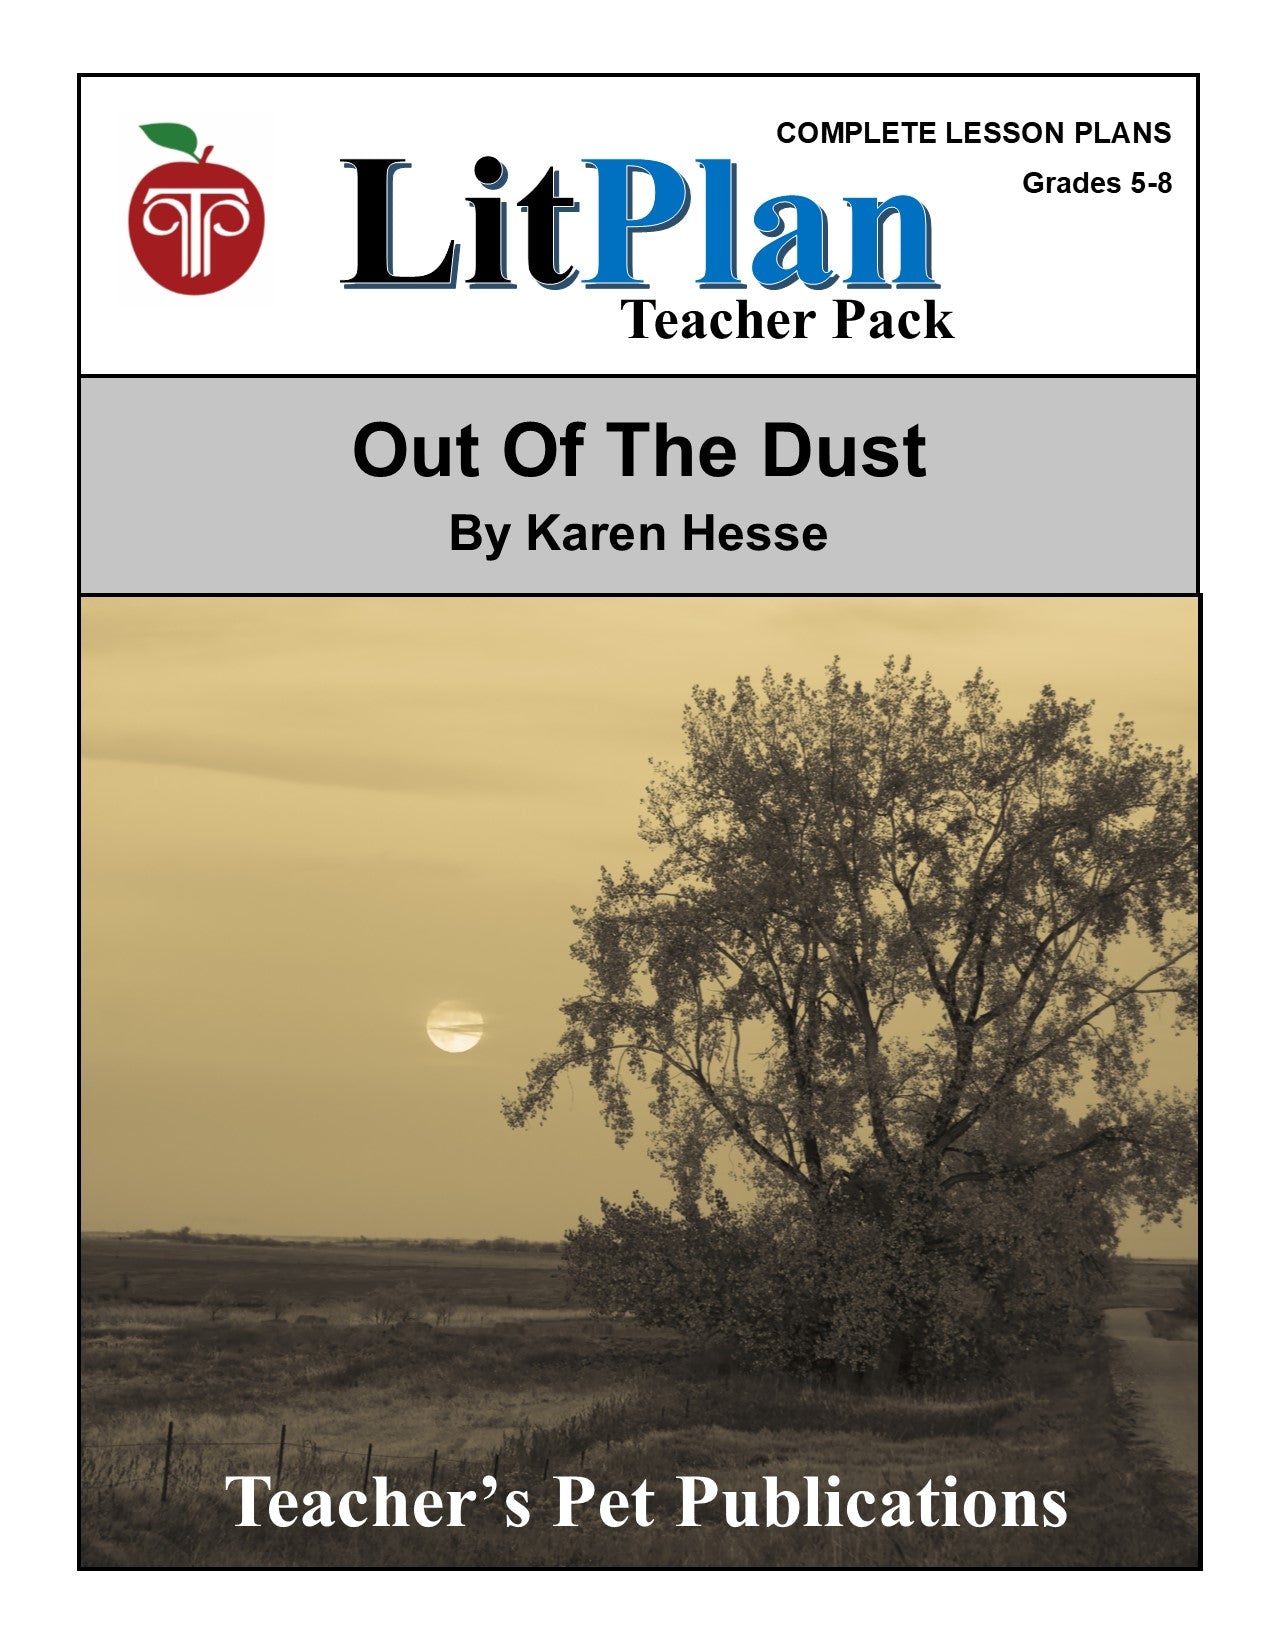 Out of the Dust: LitPlan Teacher Pack Grades 5-8